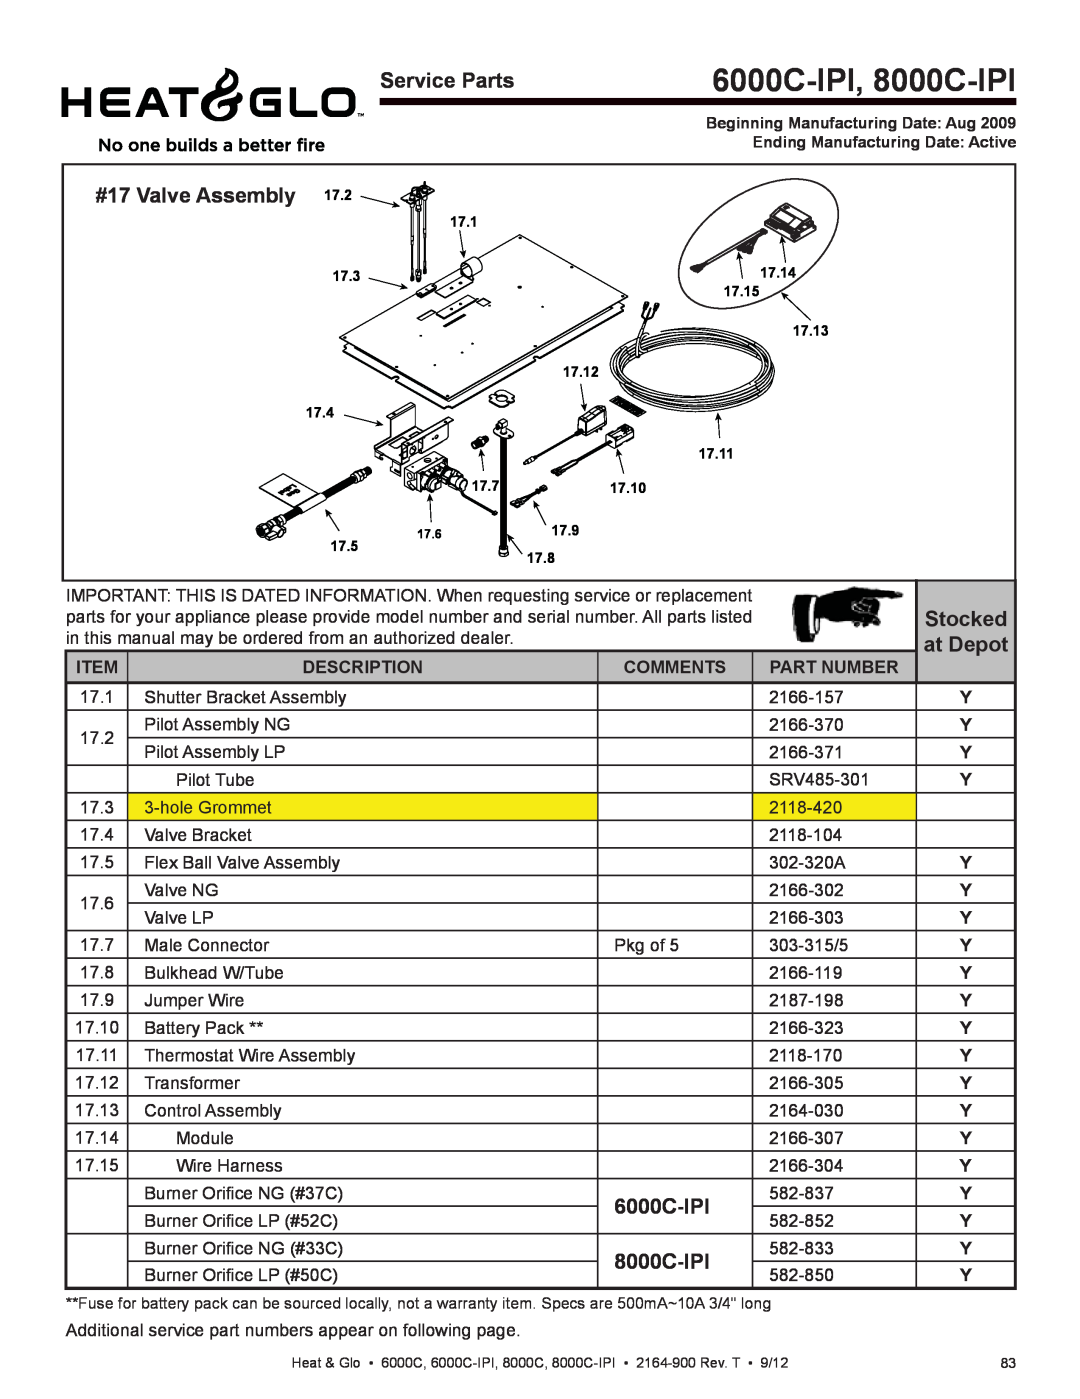 Heat & Glo LifeStyle 6000C-IPI, 8000C-IPI, Service Parts, #17 Valve Assembly, at Depot, Stocked, Item, Description 